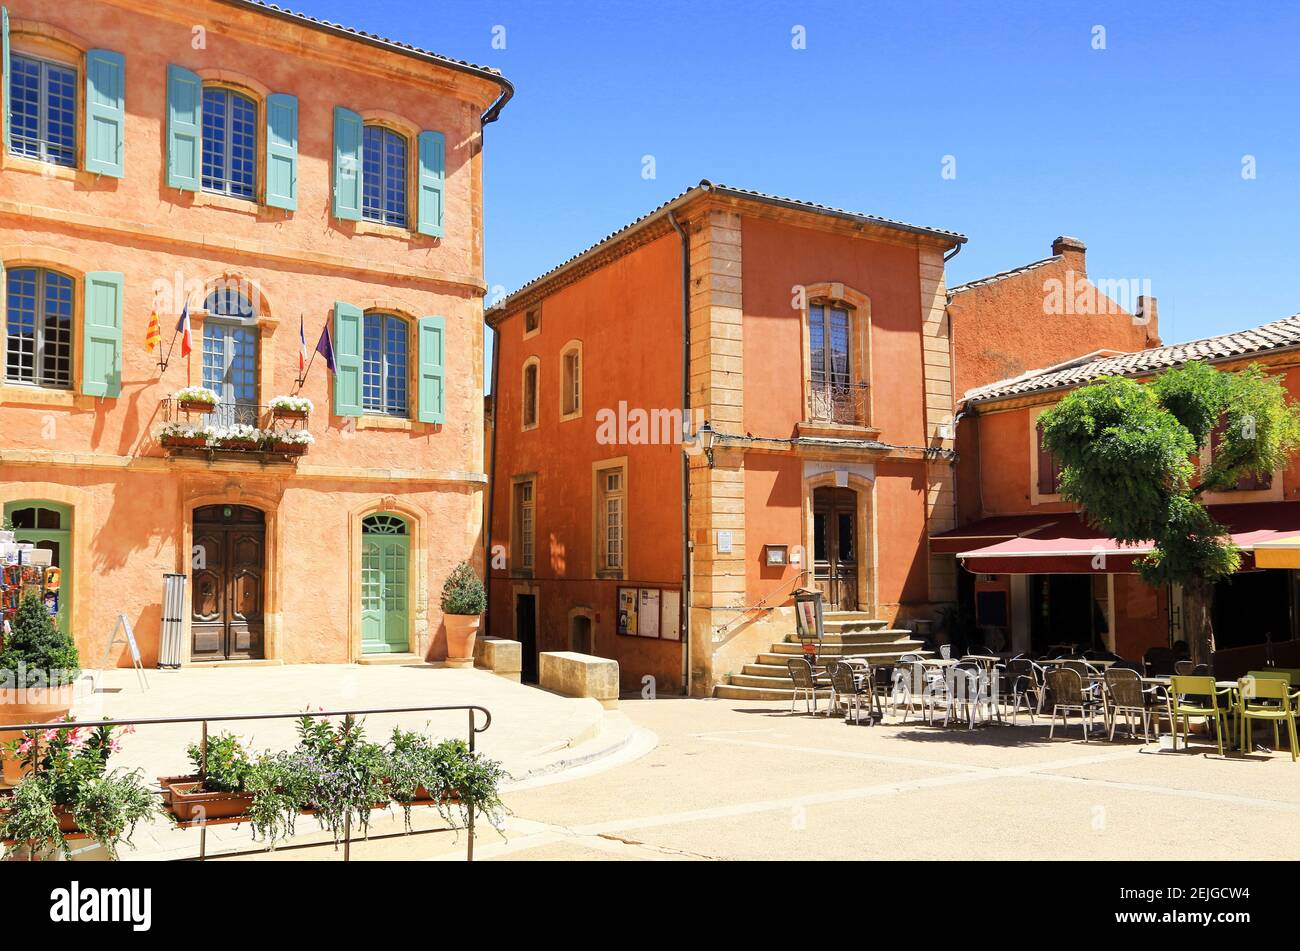 Ocker façades auf dem Roussillon Platz in der Provence, Frankreich. Stockfoto